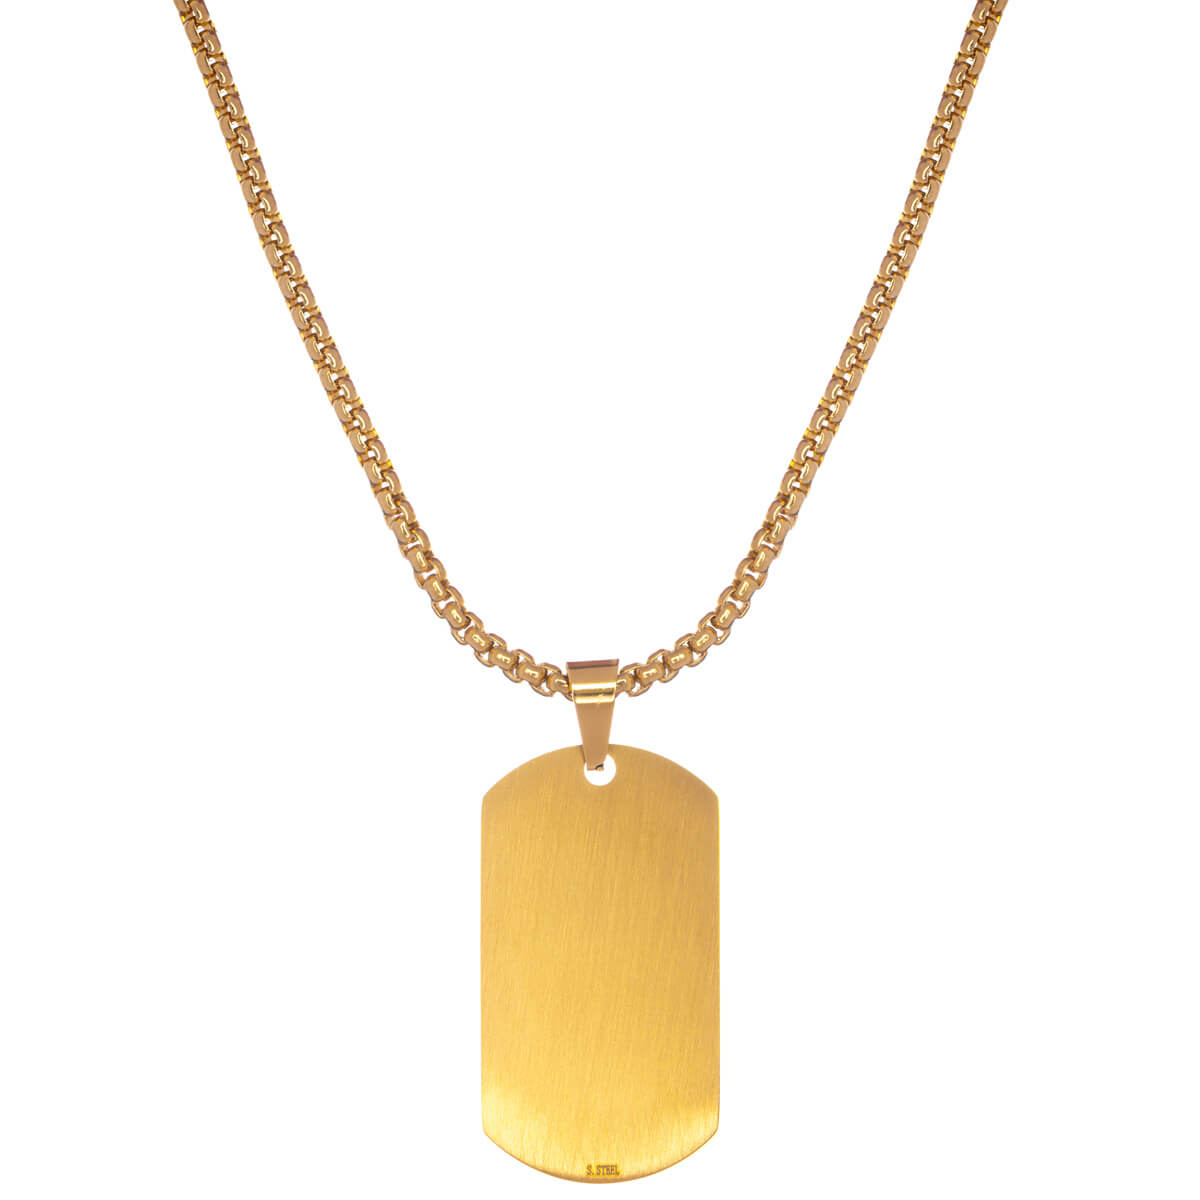 Tile pendant steel necklace (steel 316L)